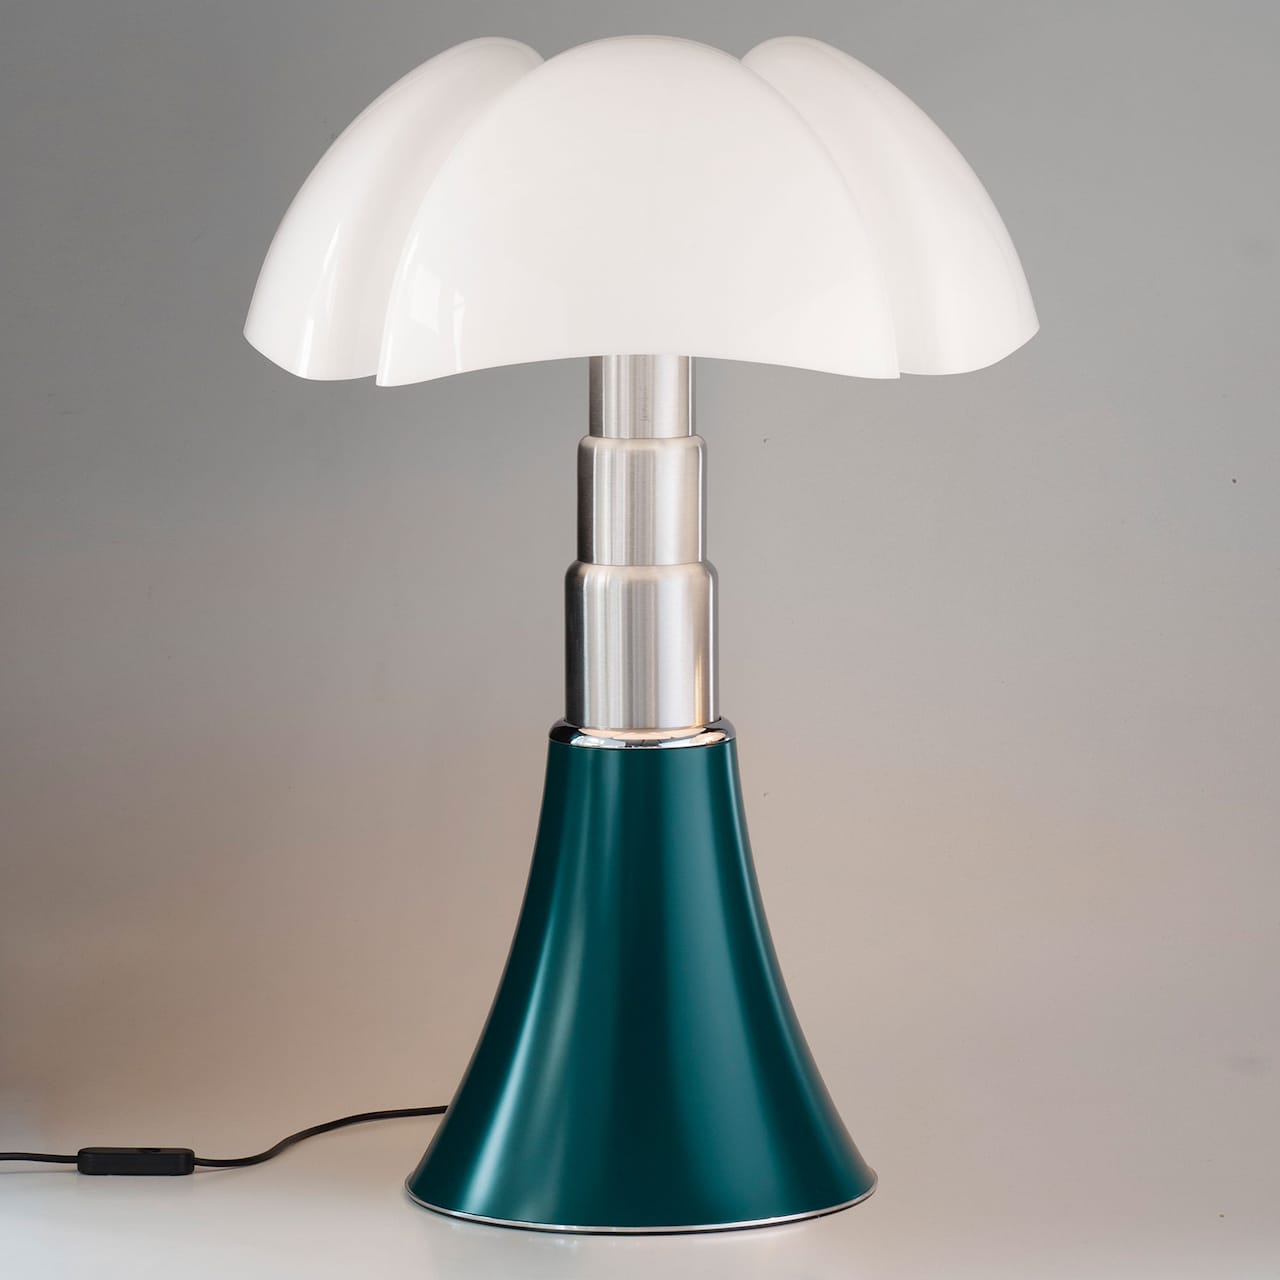 Pipistrello Medium Table Lamp, Agave Green - Dimbar